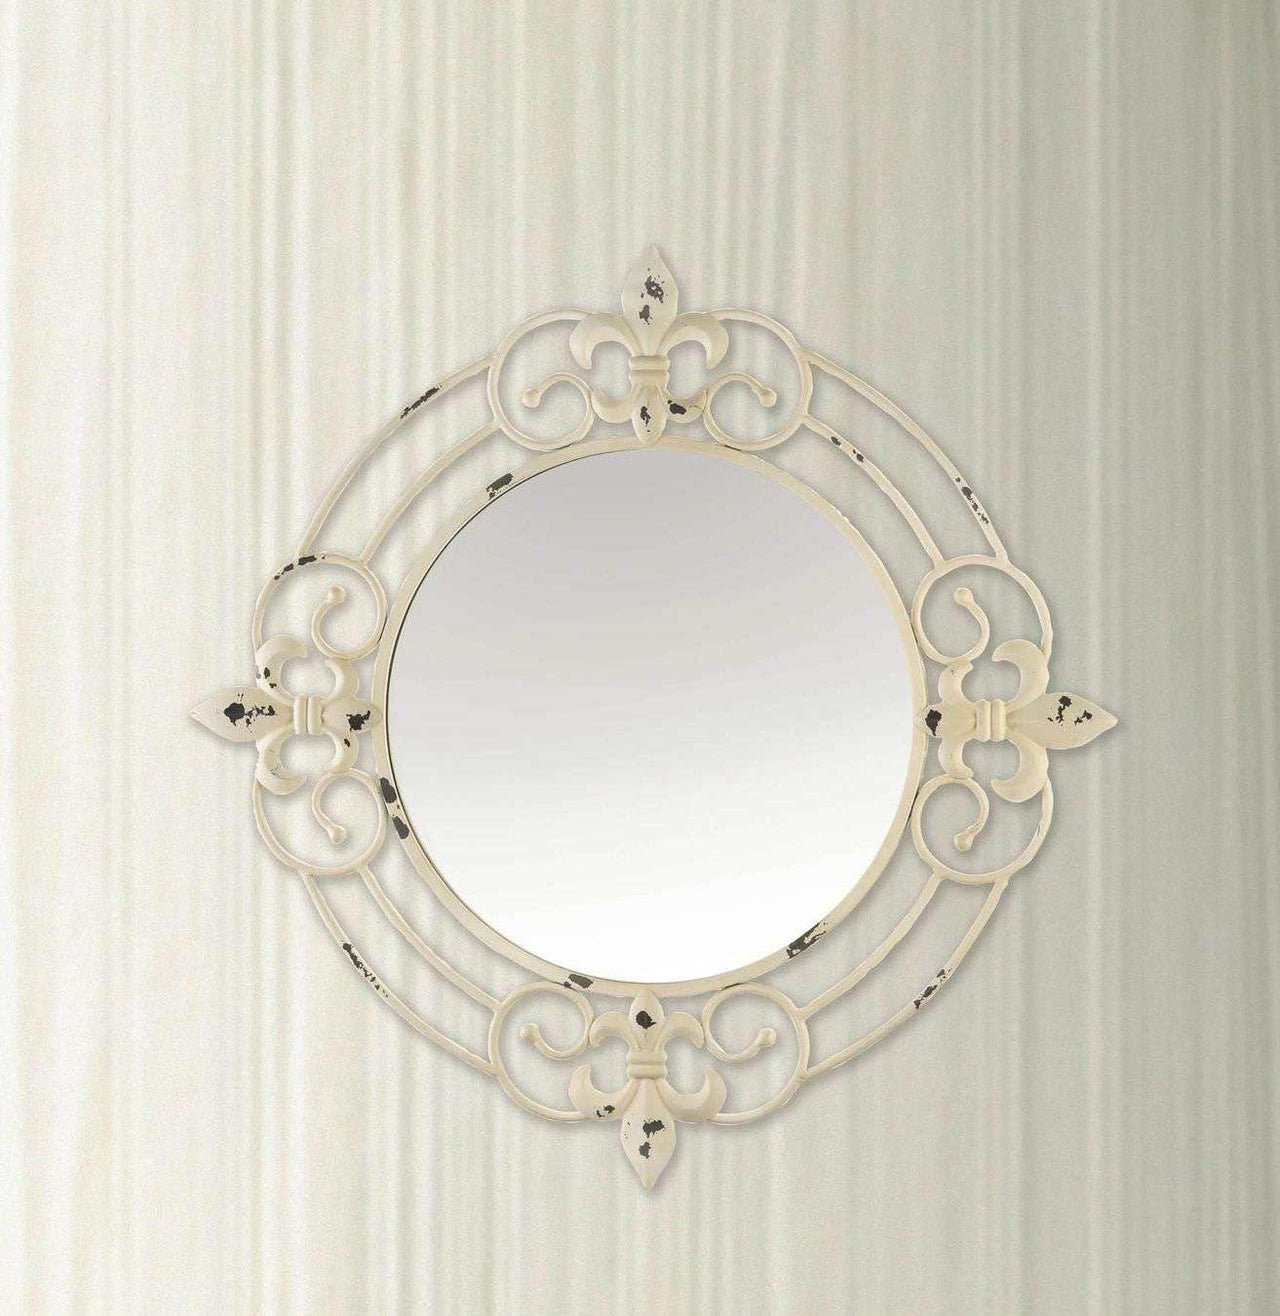 Antique White Fleur-De-Lis Wall Mirror - The Fox Decor